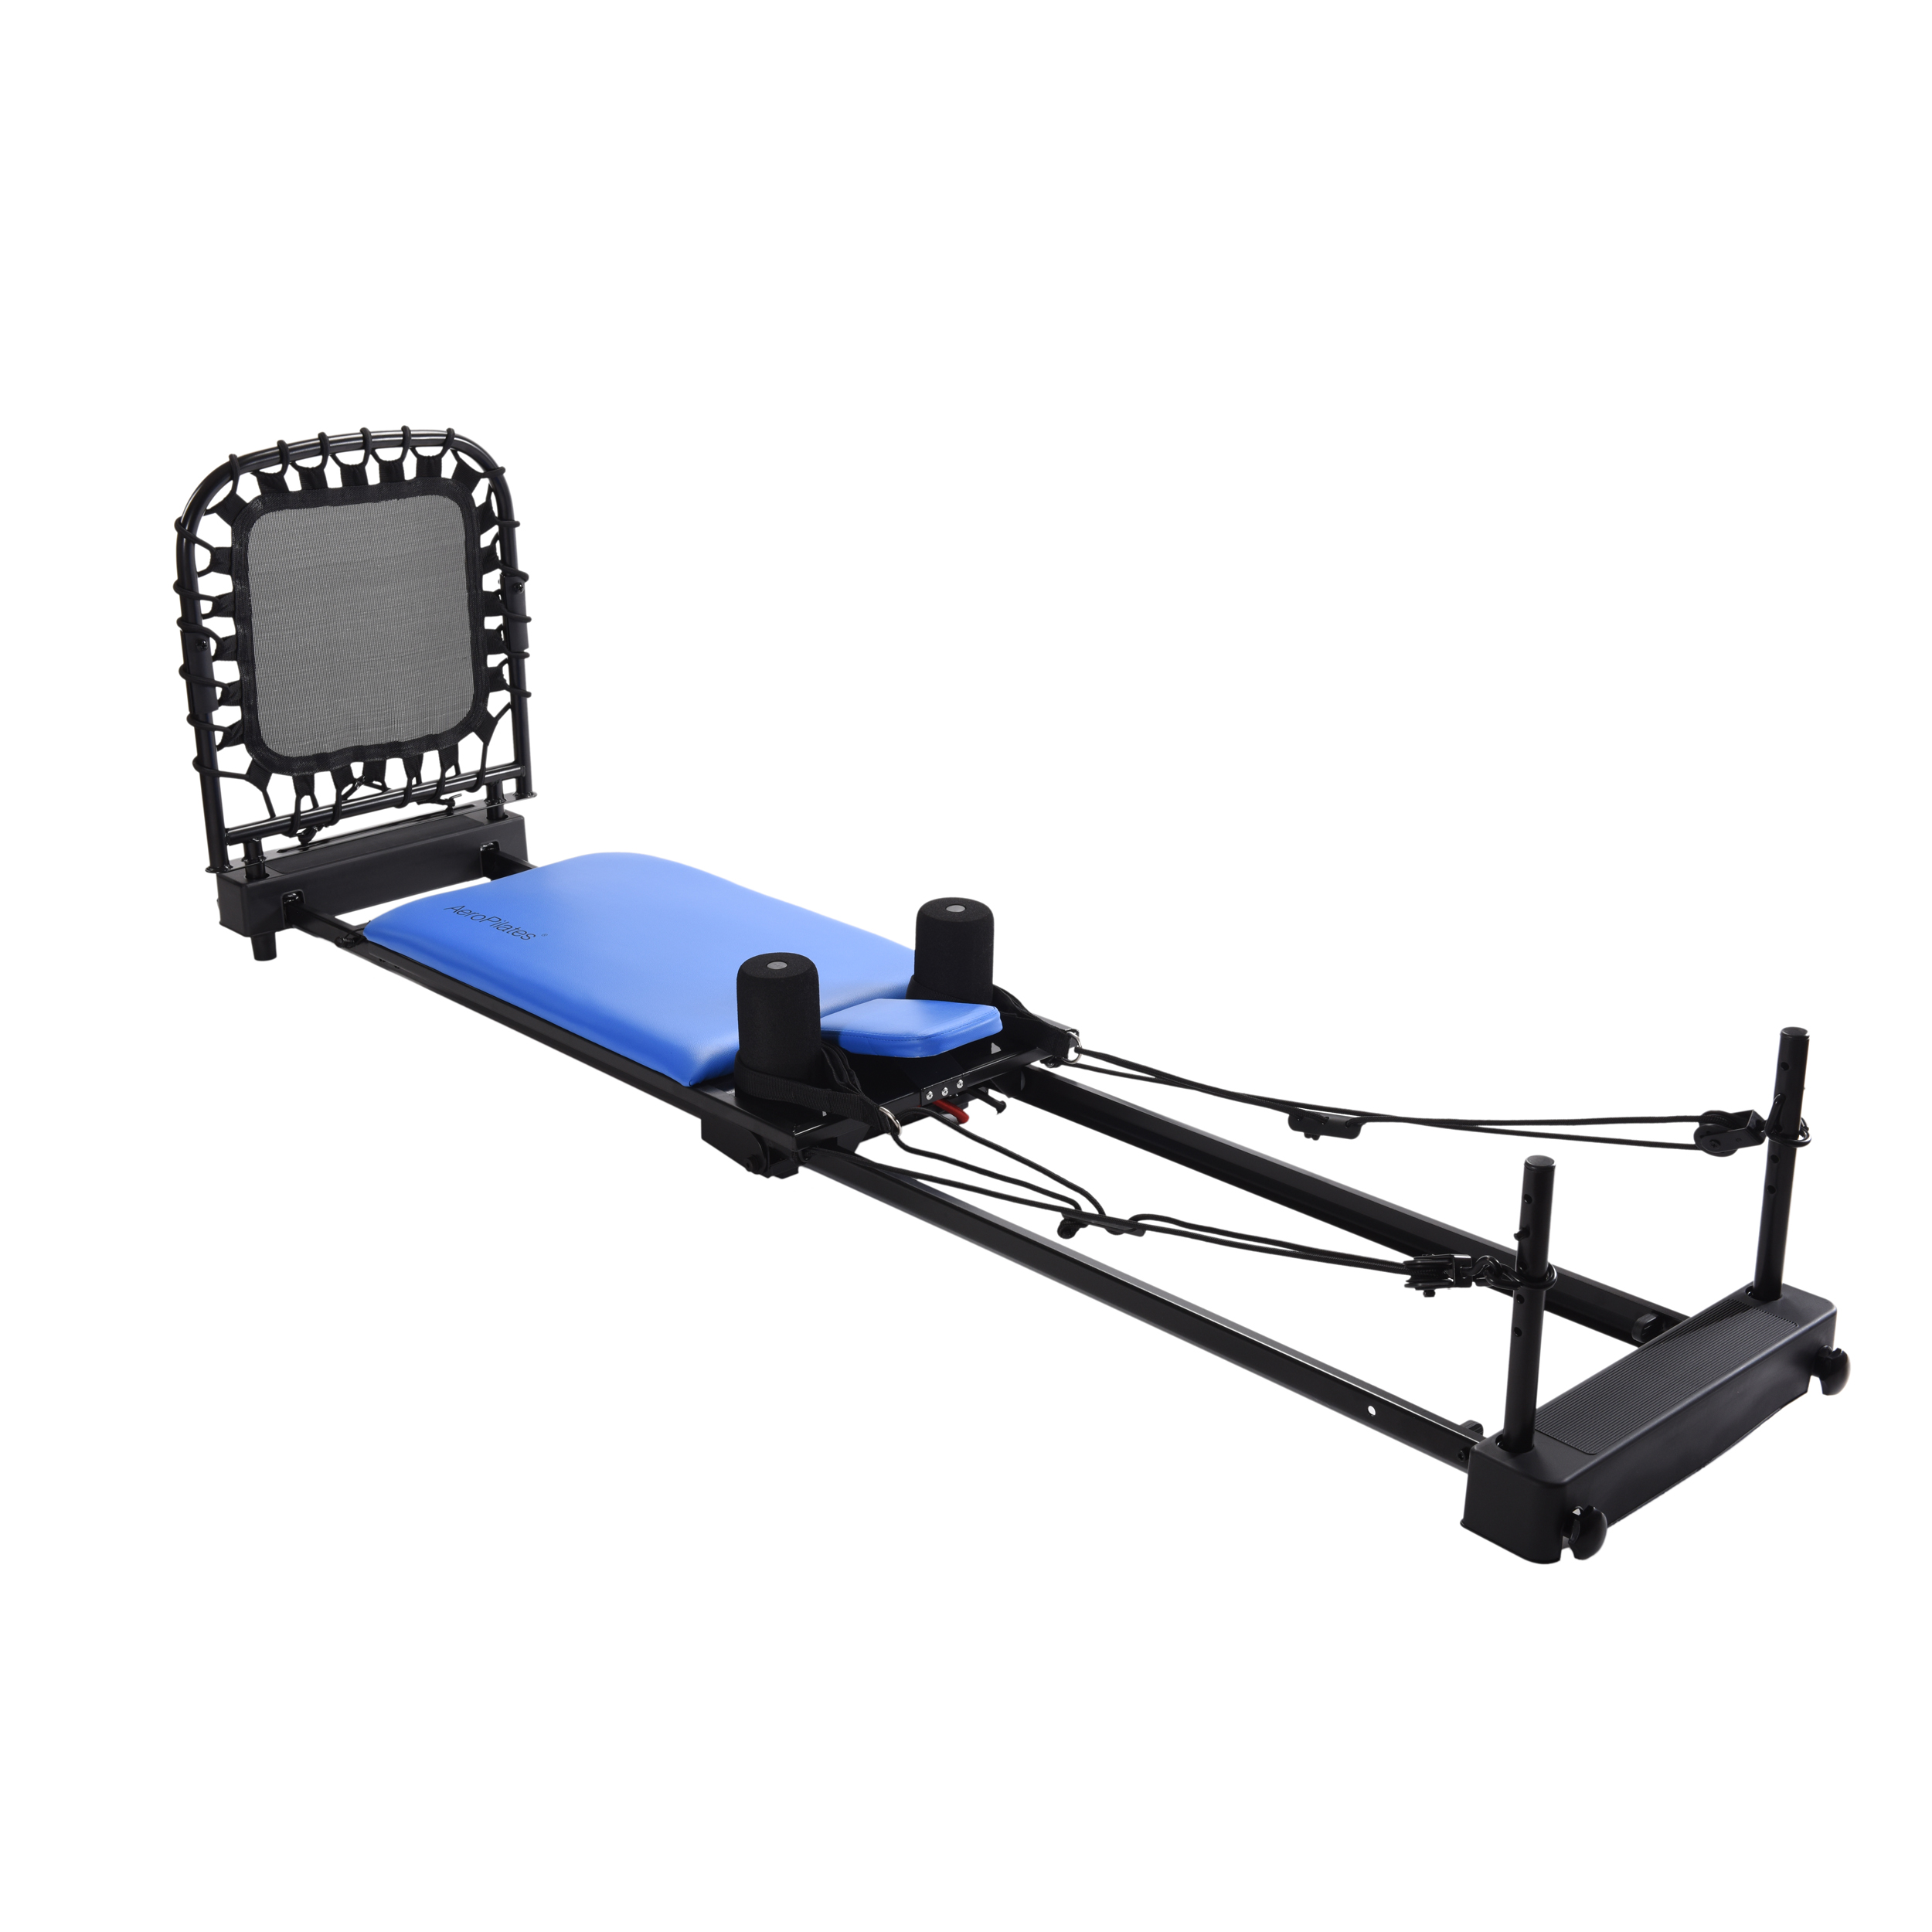 AeroPilates Reformer Plus 379 - Pilates Reformer Workout Machine